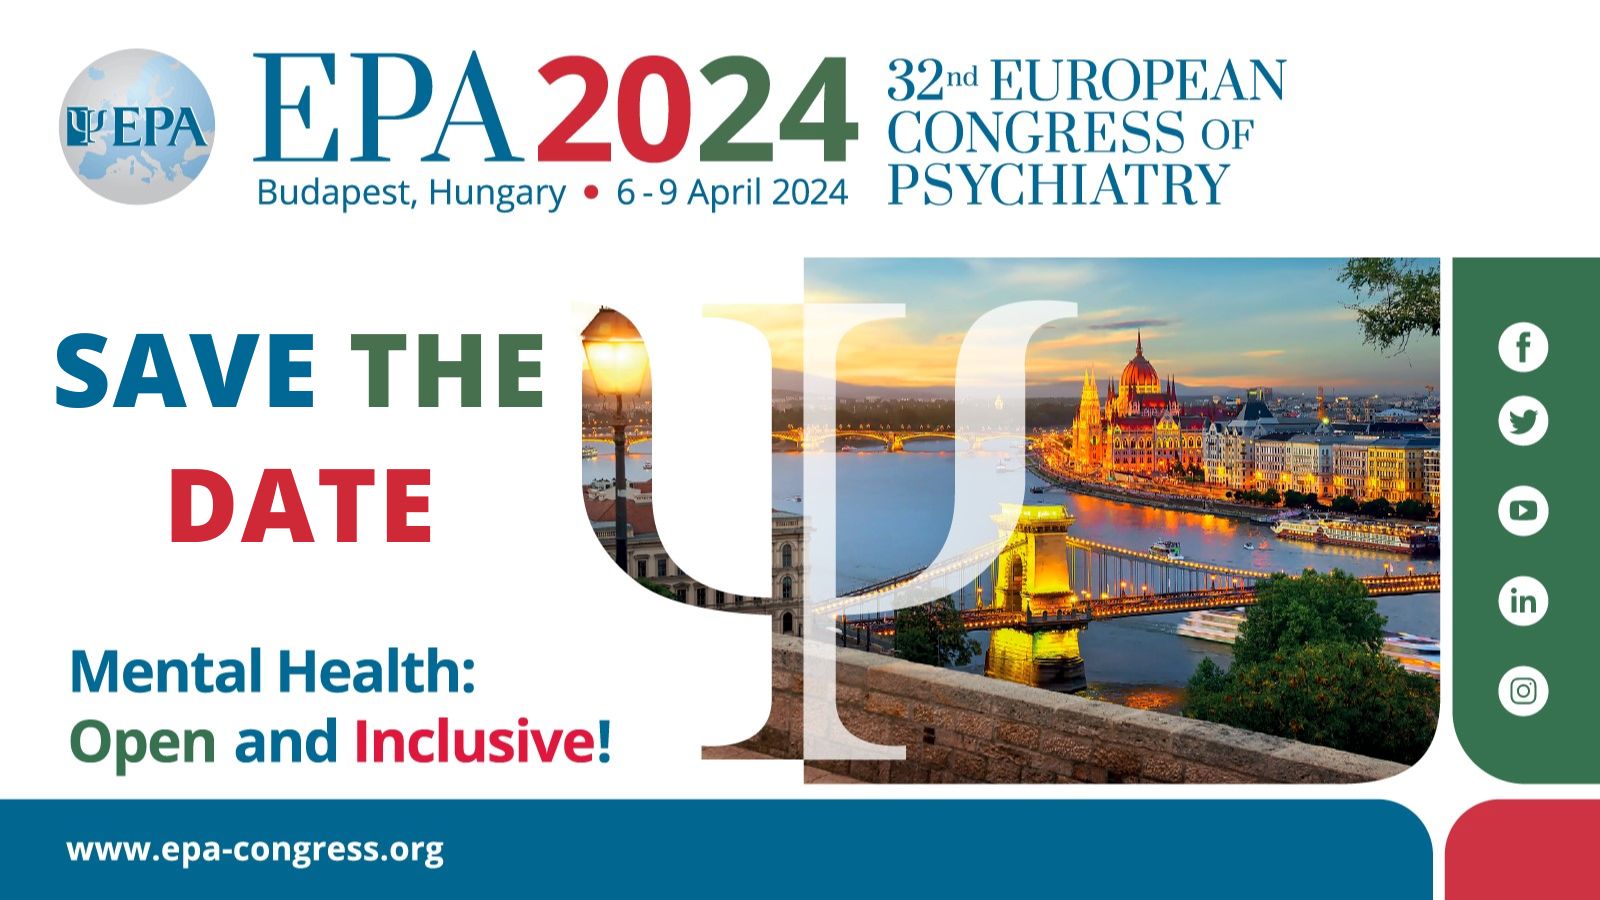 32nd European Congress of Psychiatry, Budapest, Hungary